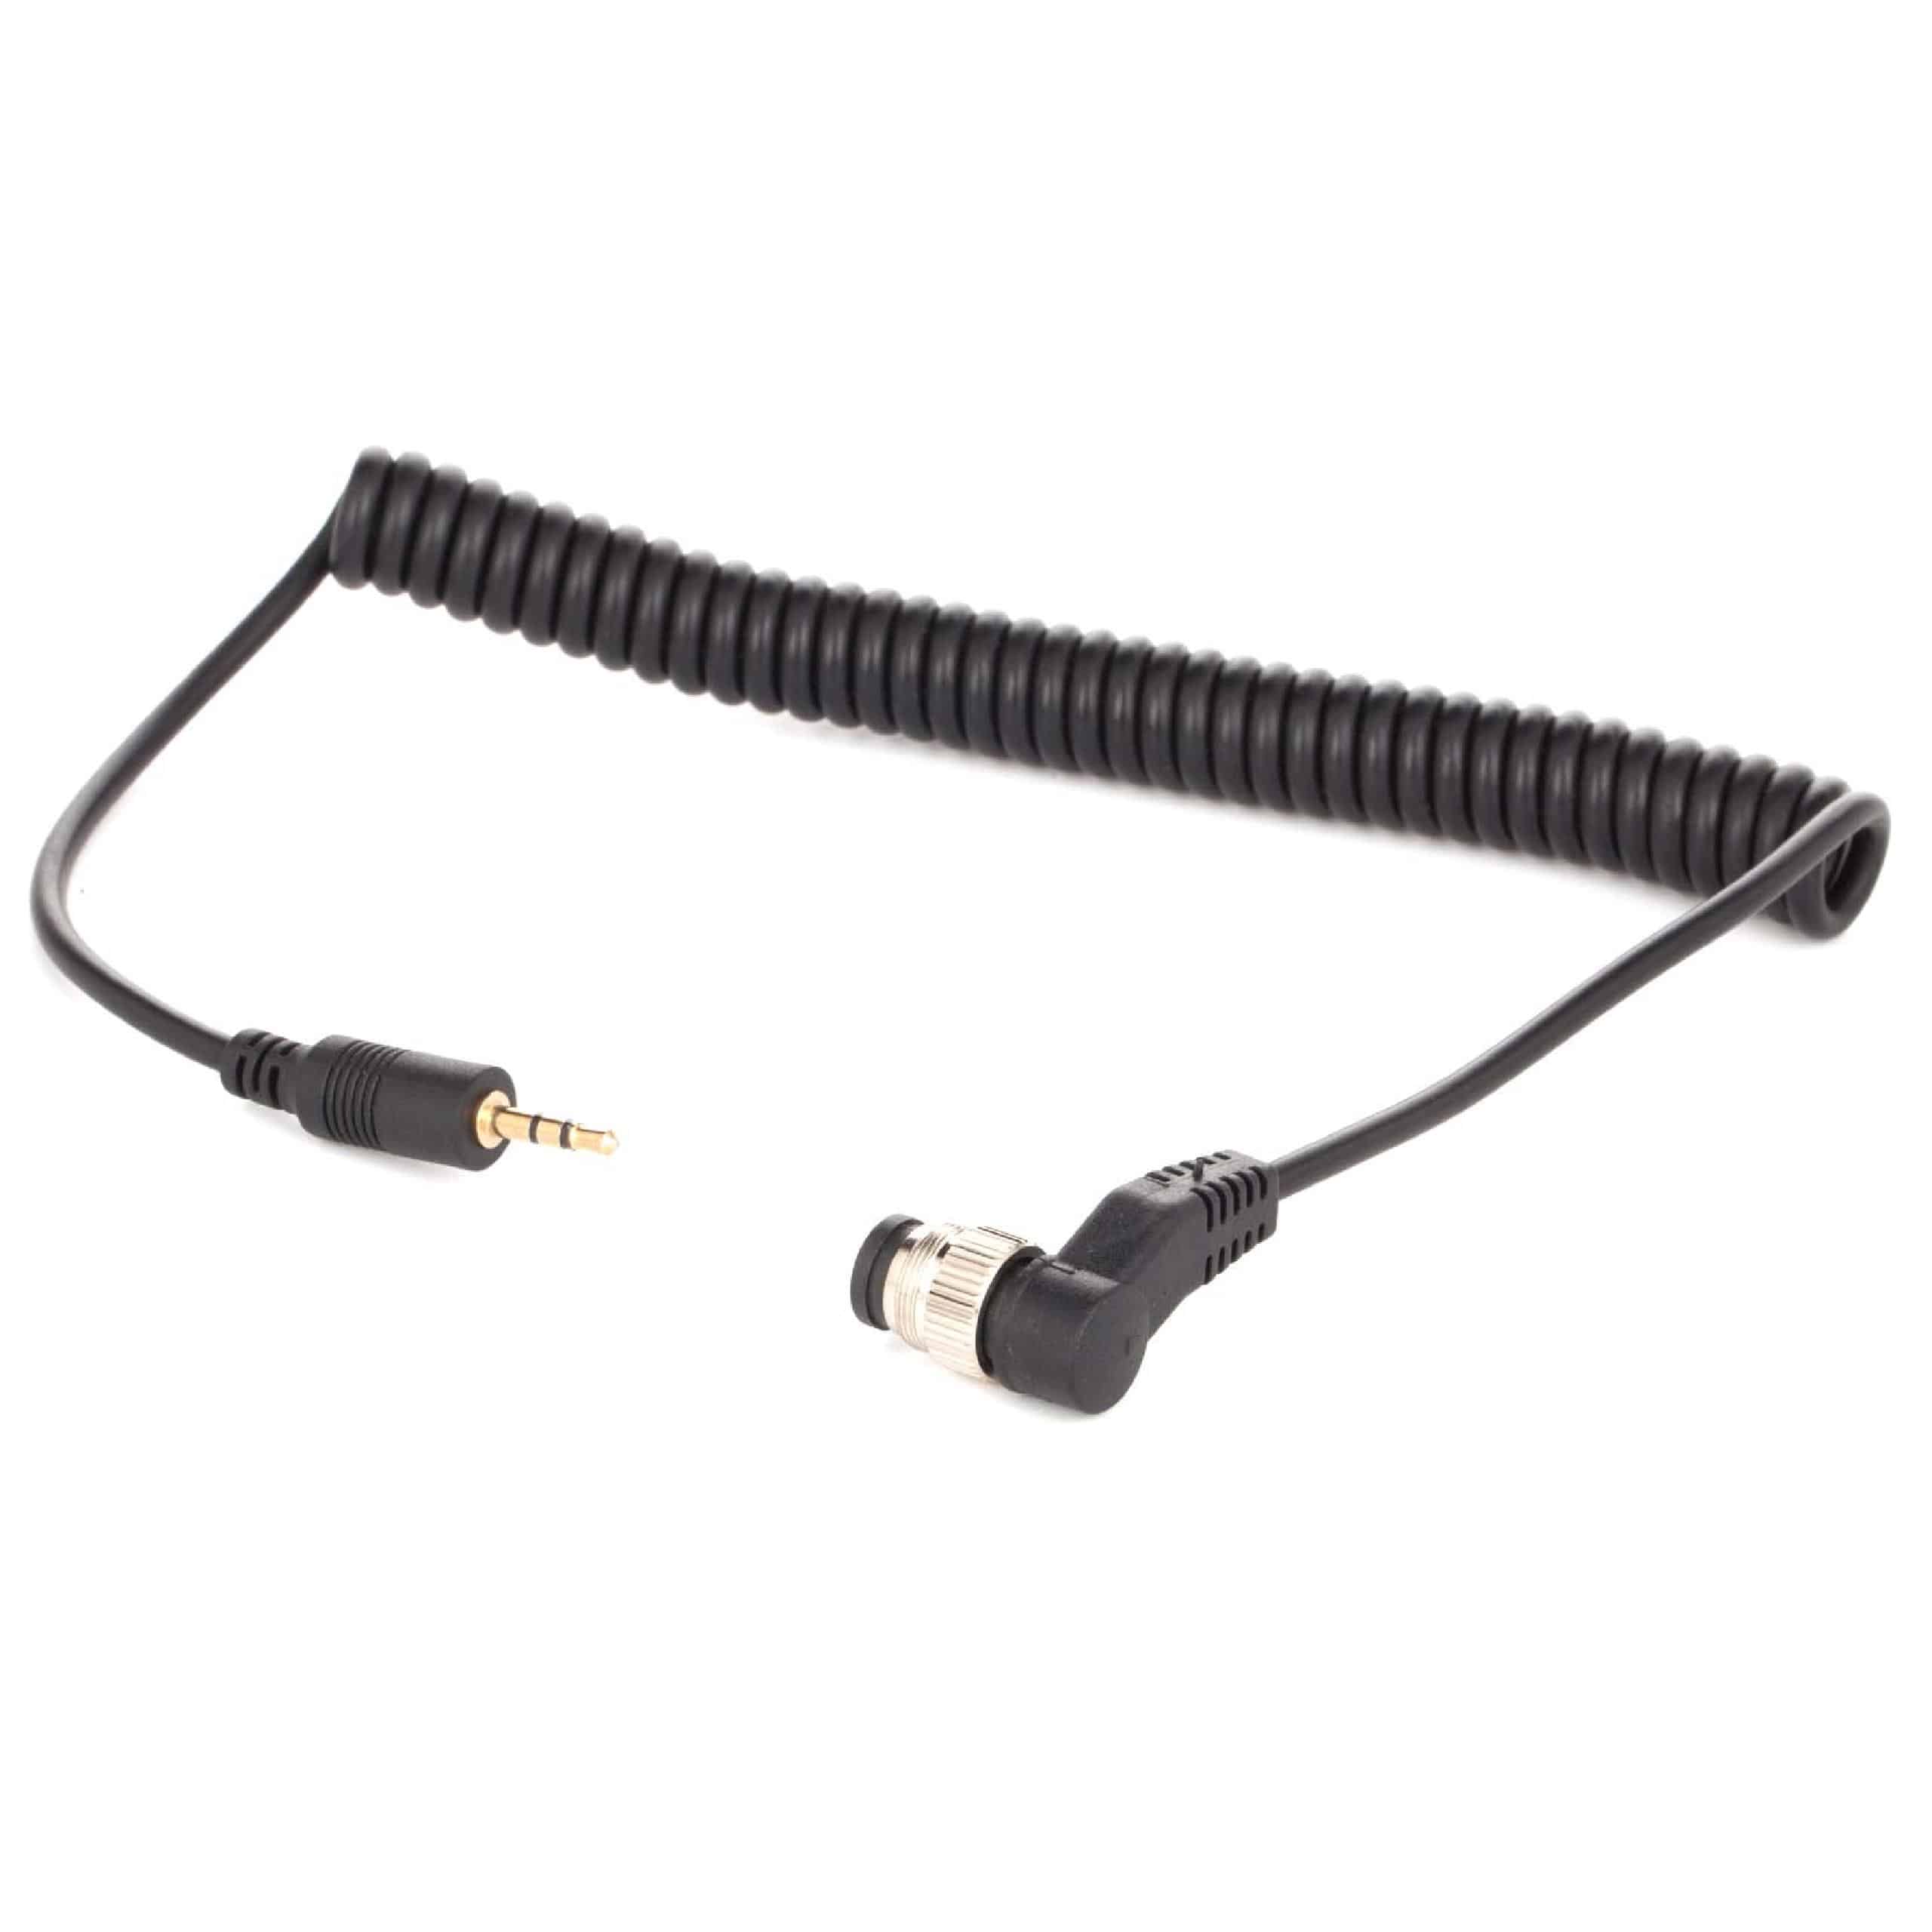 Cable for Shutter Release suitable for S5 Pro Fujifilm, Kodak, Nikon S5 Pro Camera etc. - 112 cm